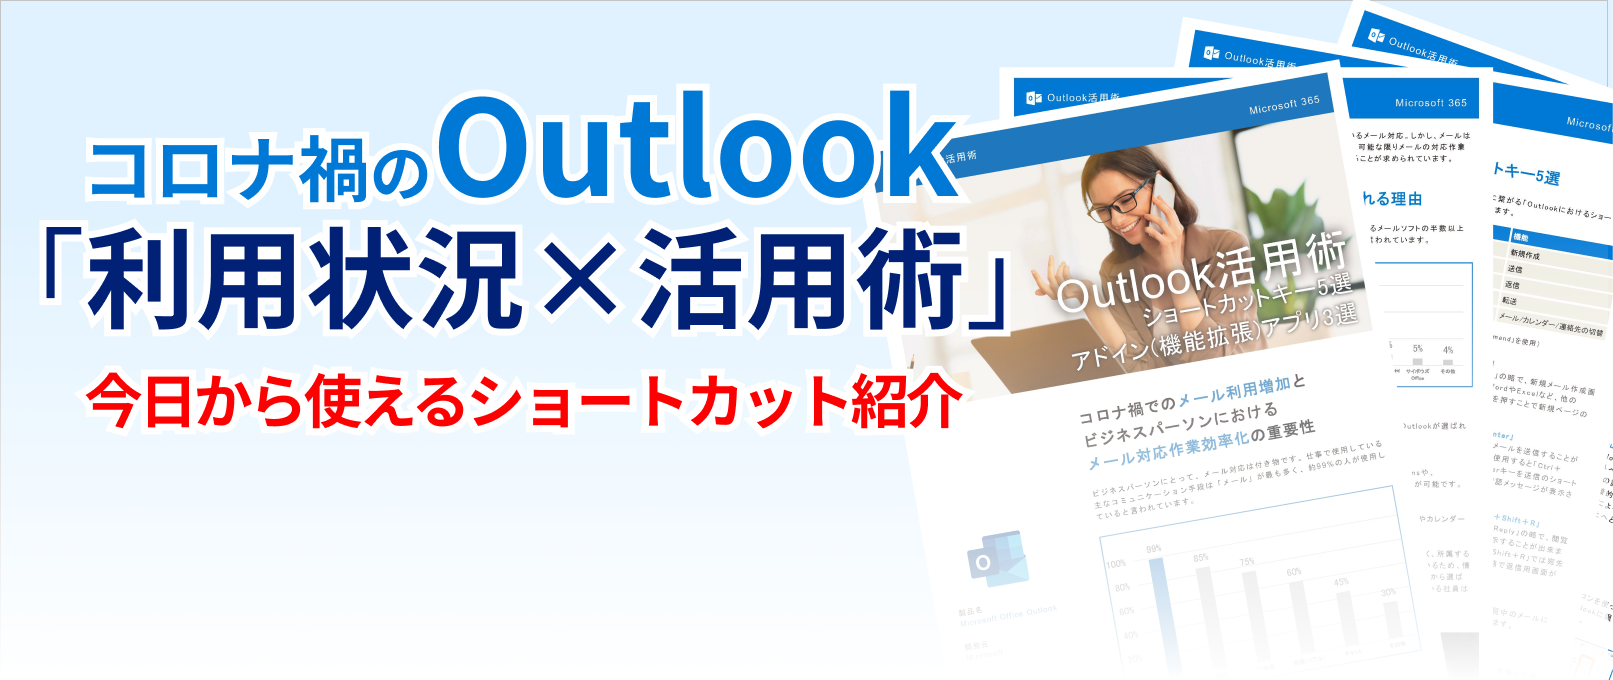 Outlook活用術 資料